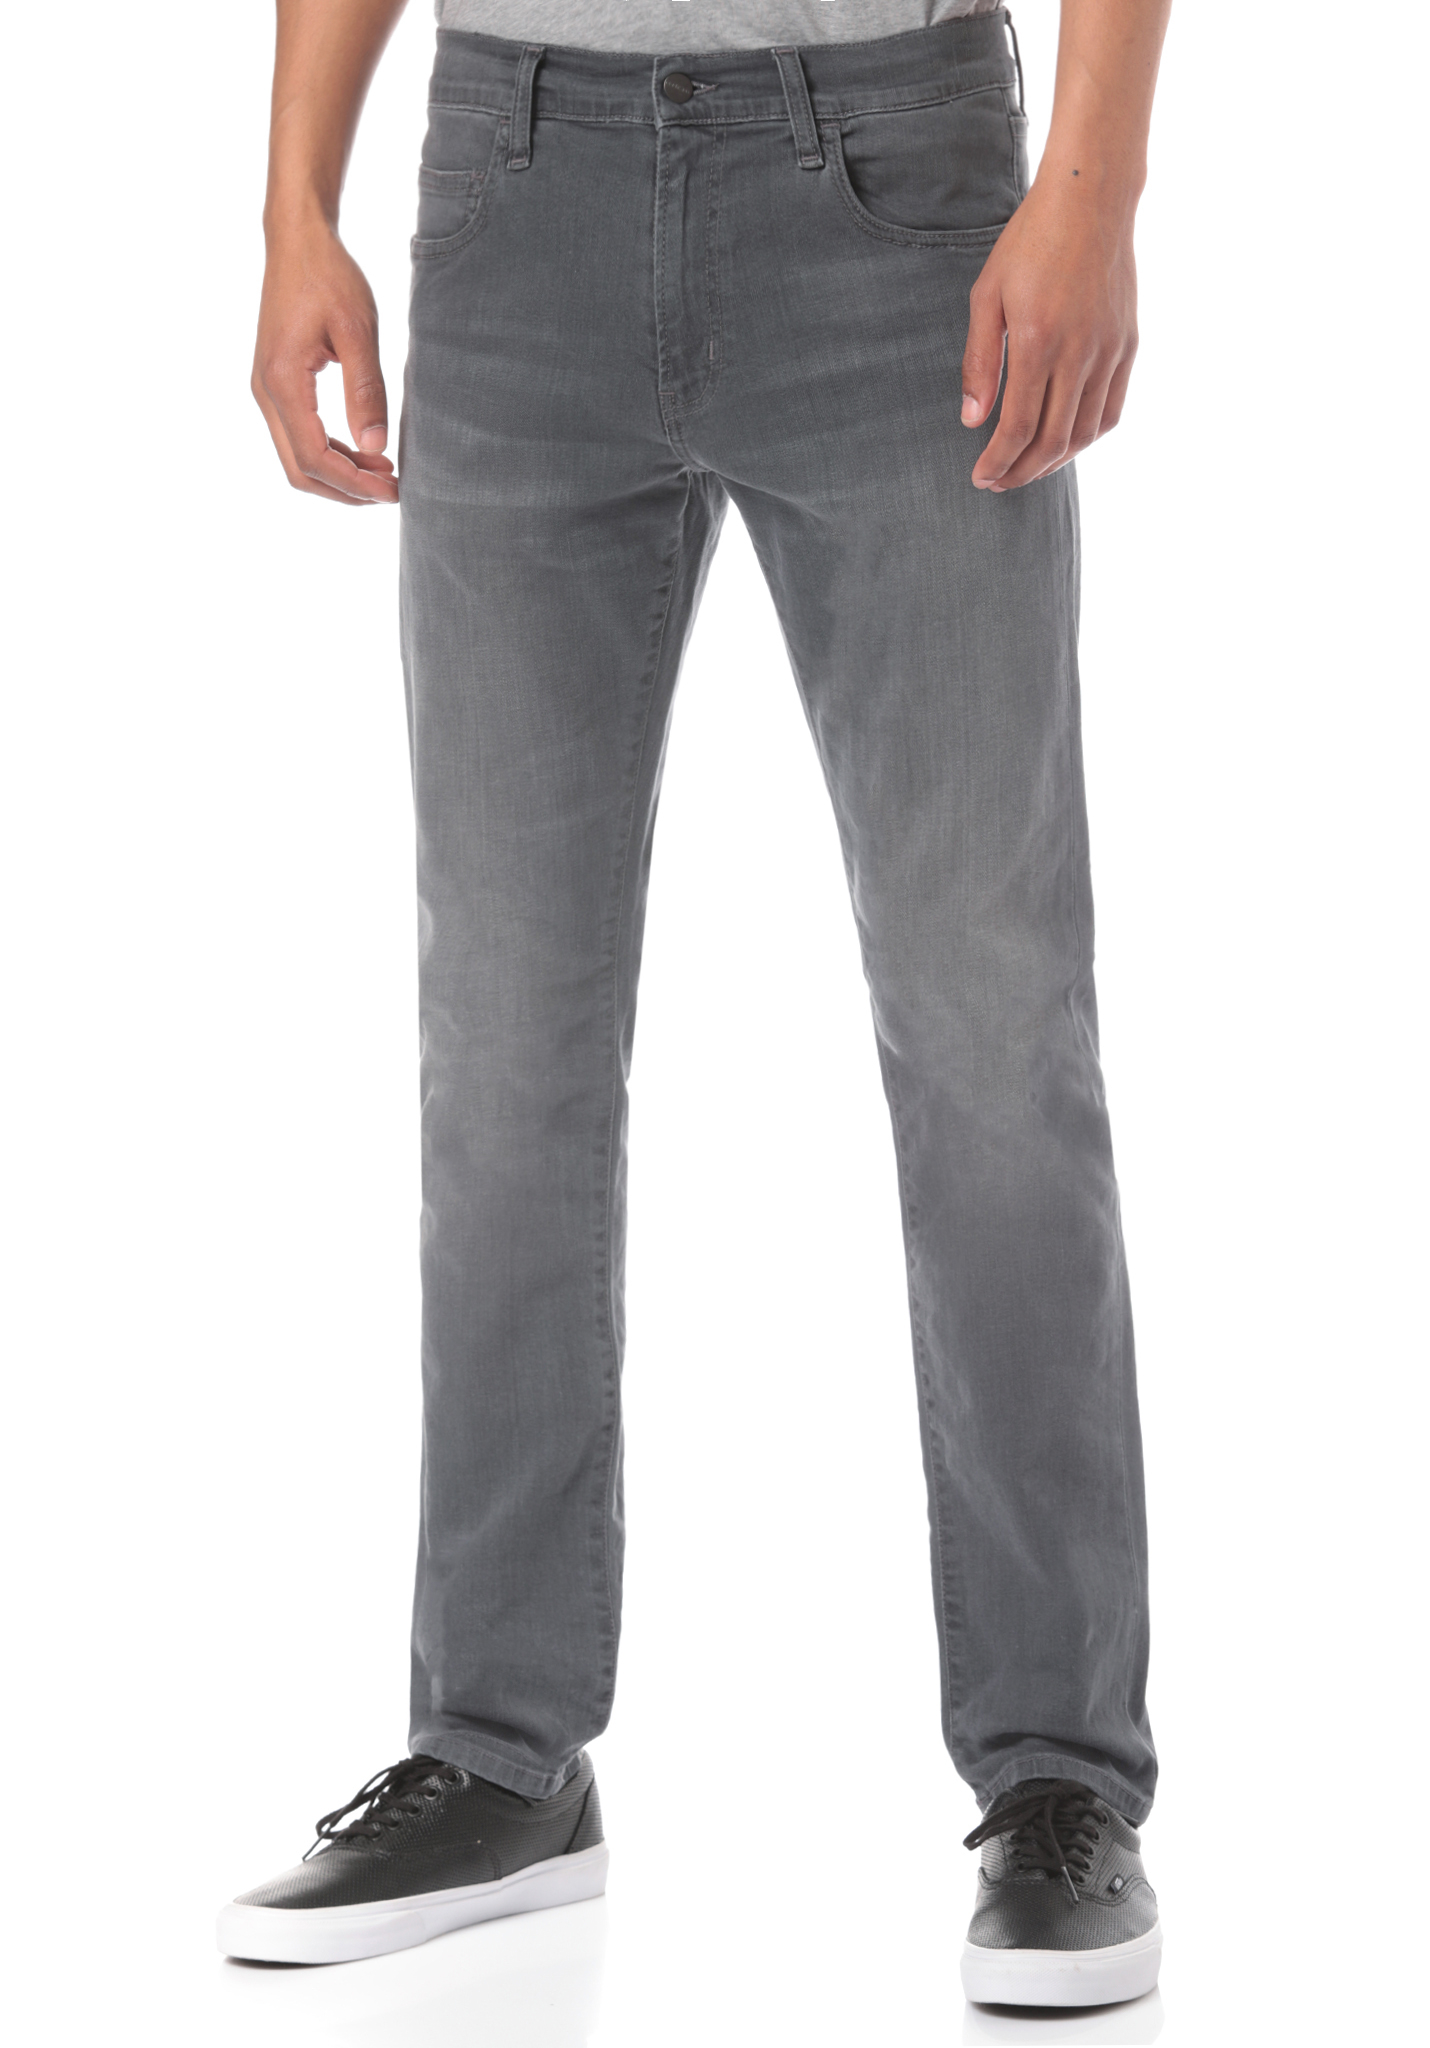 Carhartt WIP Rebel Jeans gravel 40/32